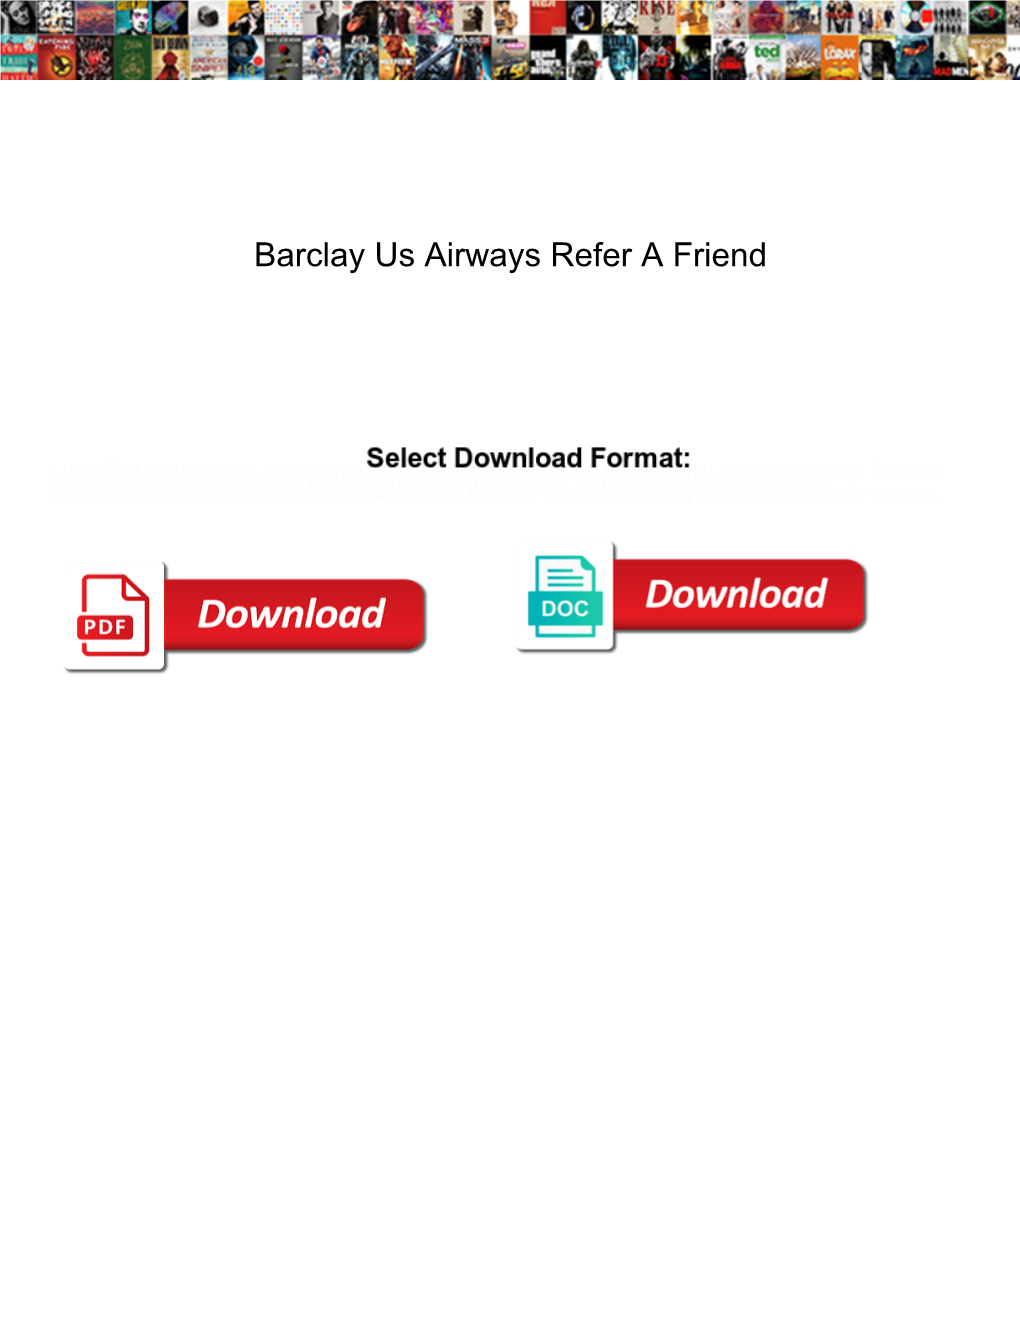 Barclay Us Airways Refer a Friend